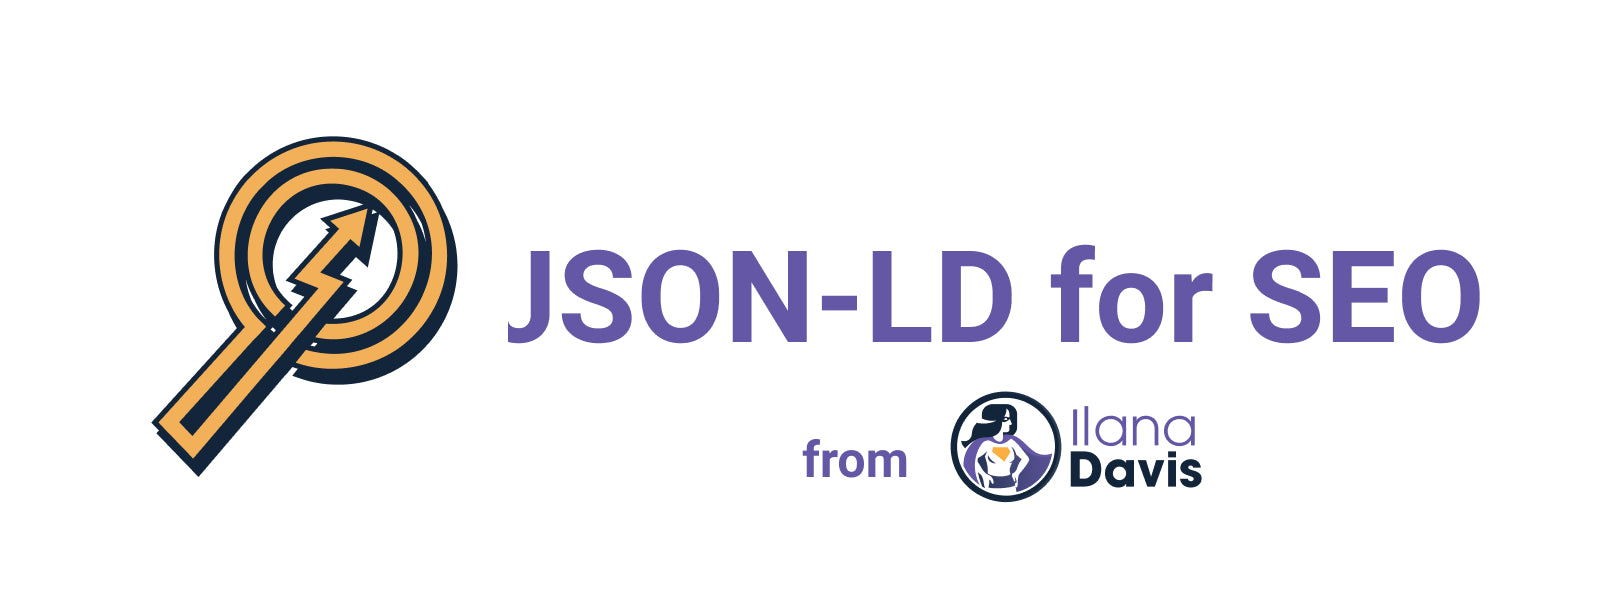 JSON-LD for SEO by Ilana Davis